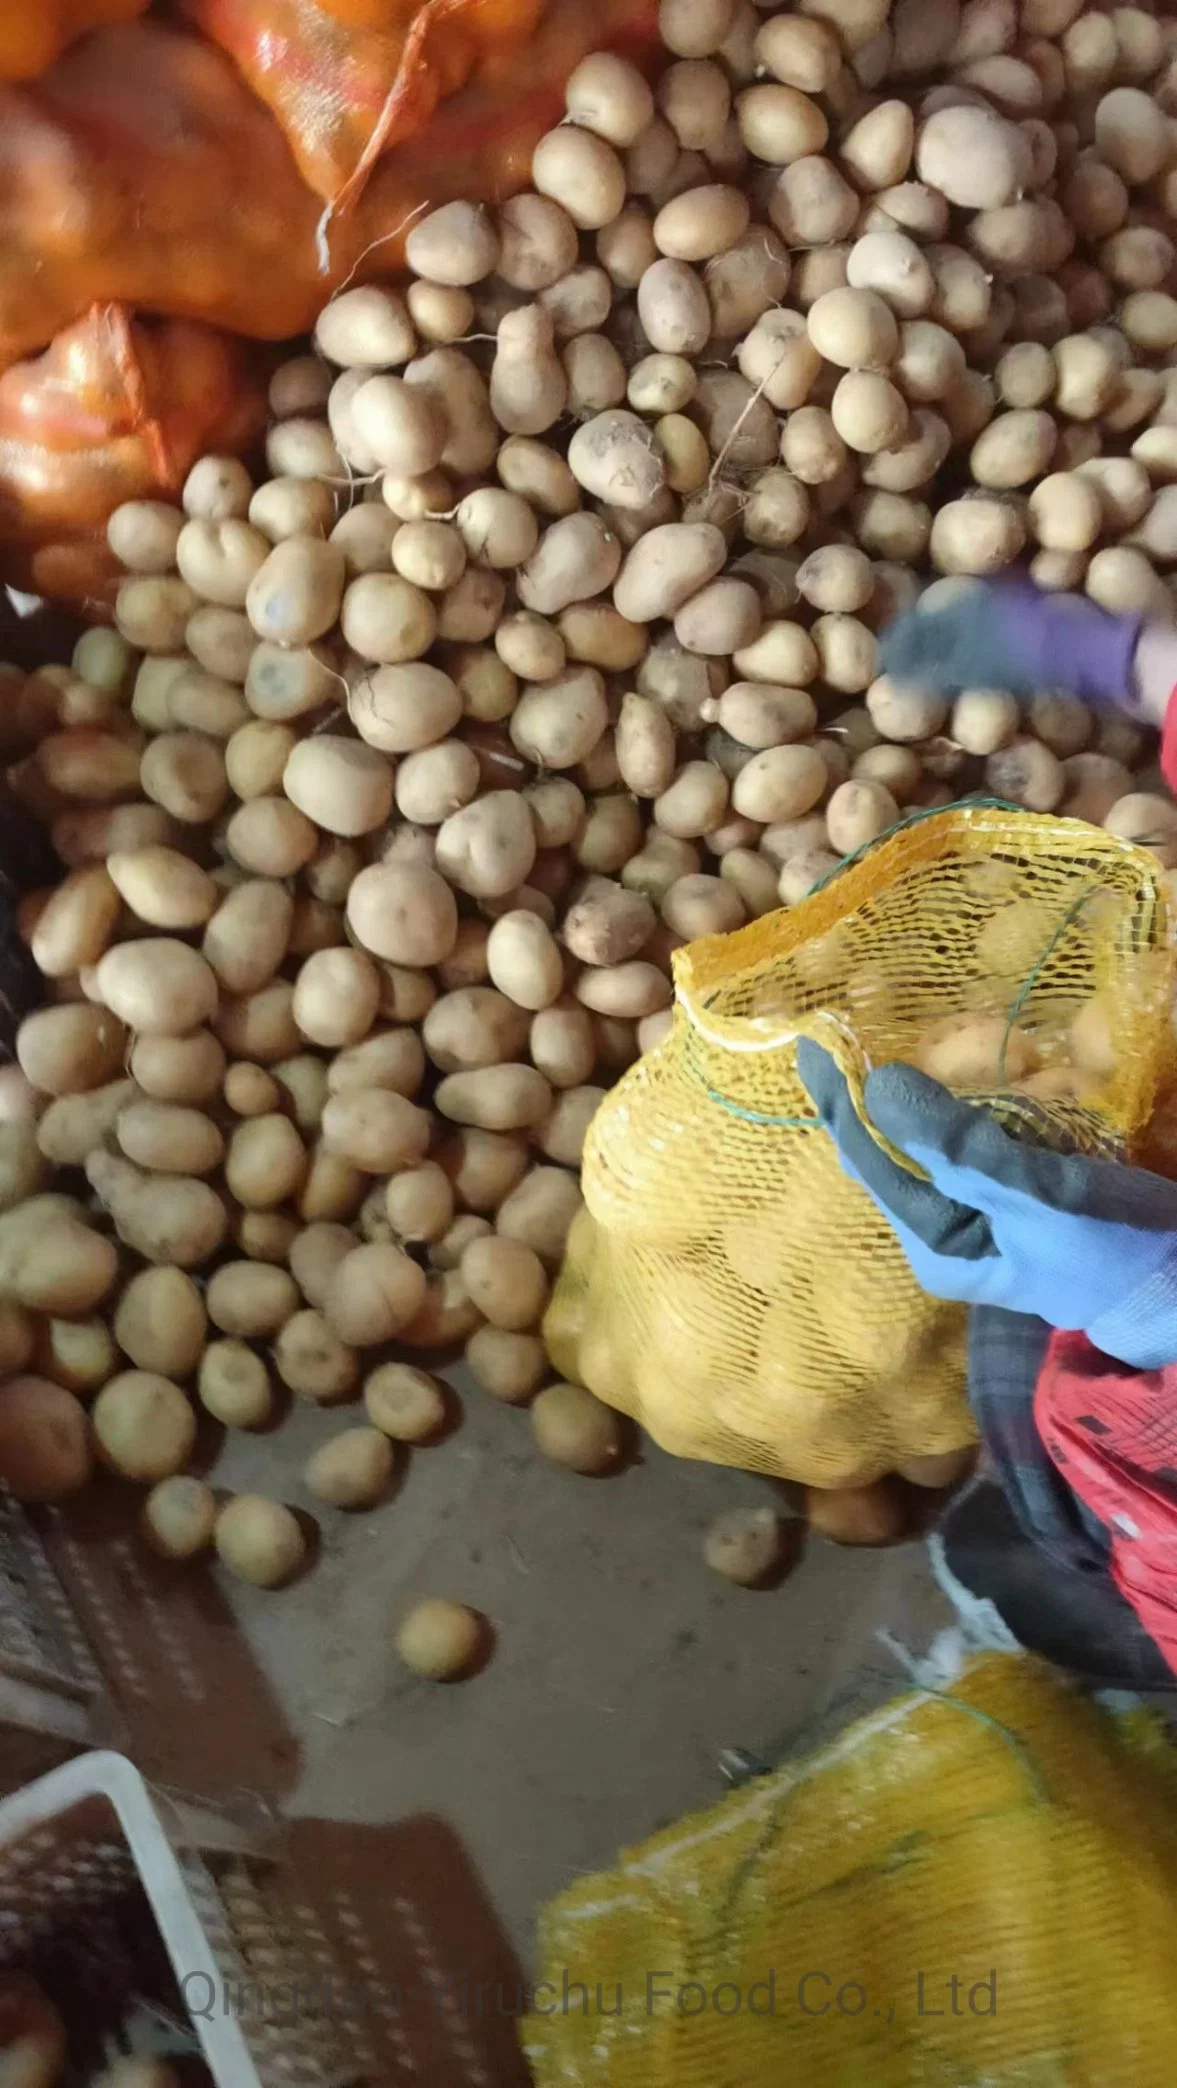 Fresh Potato Wholesale/Supplier From China